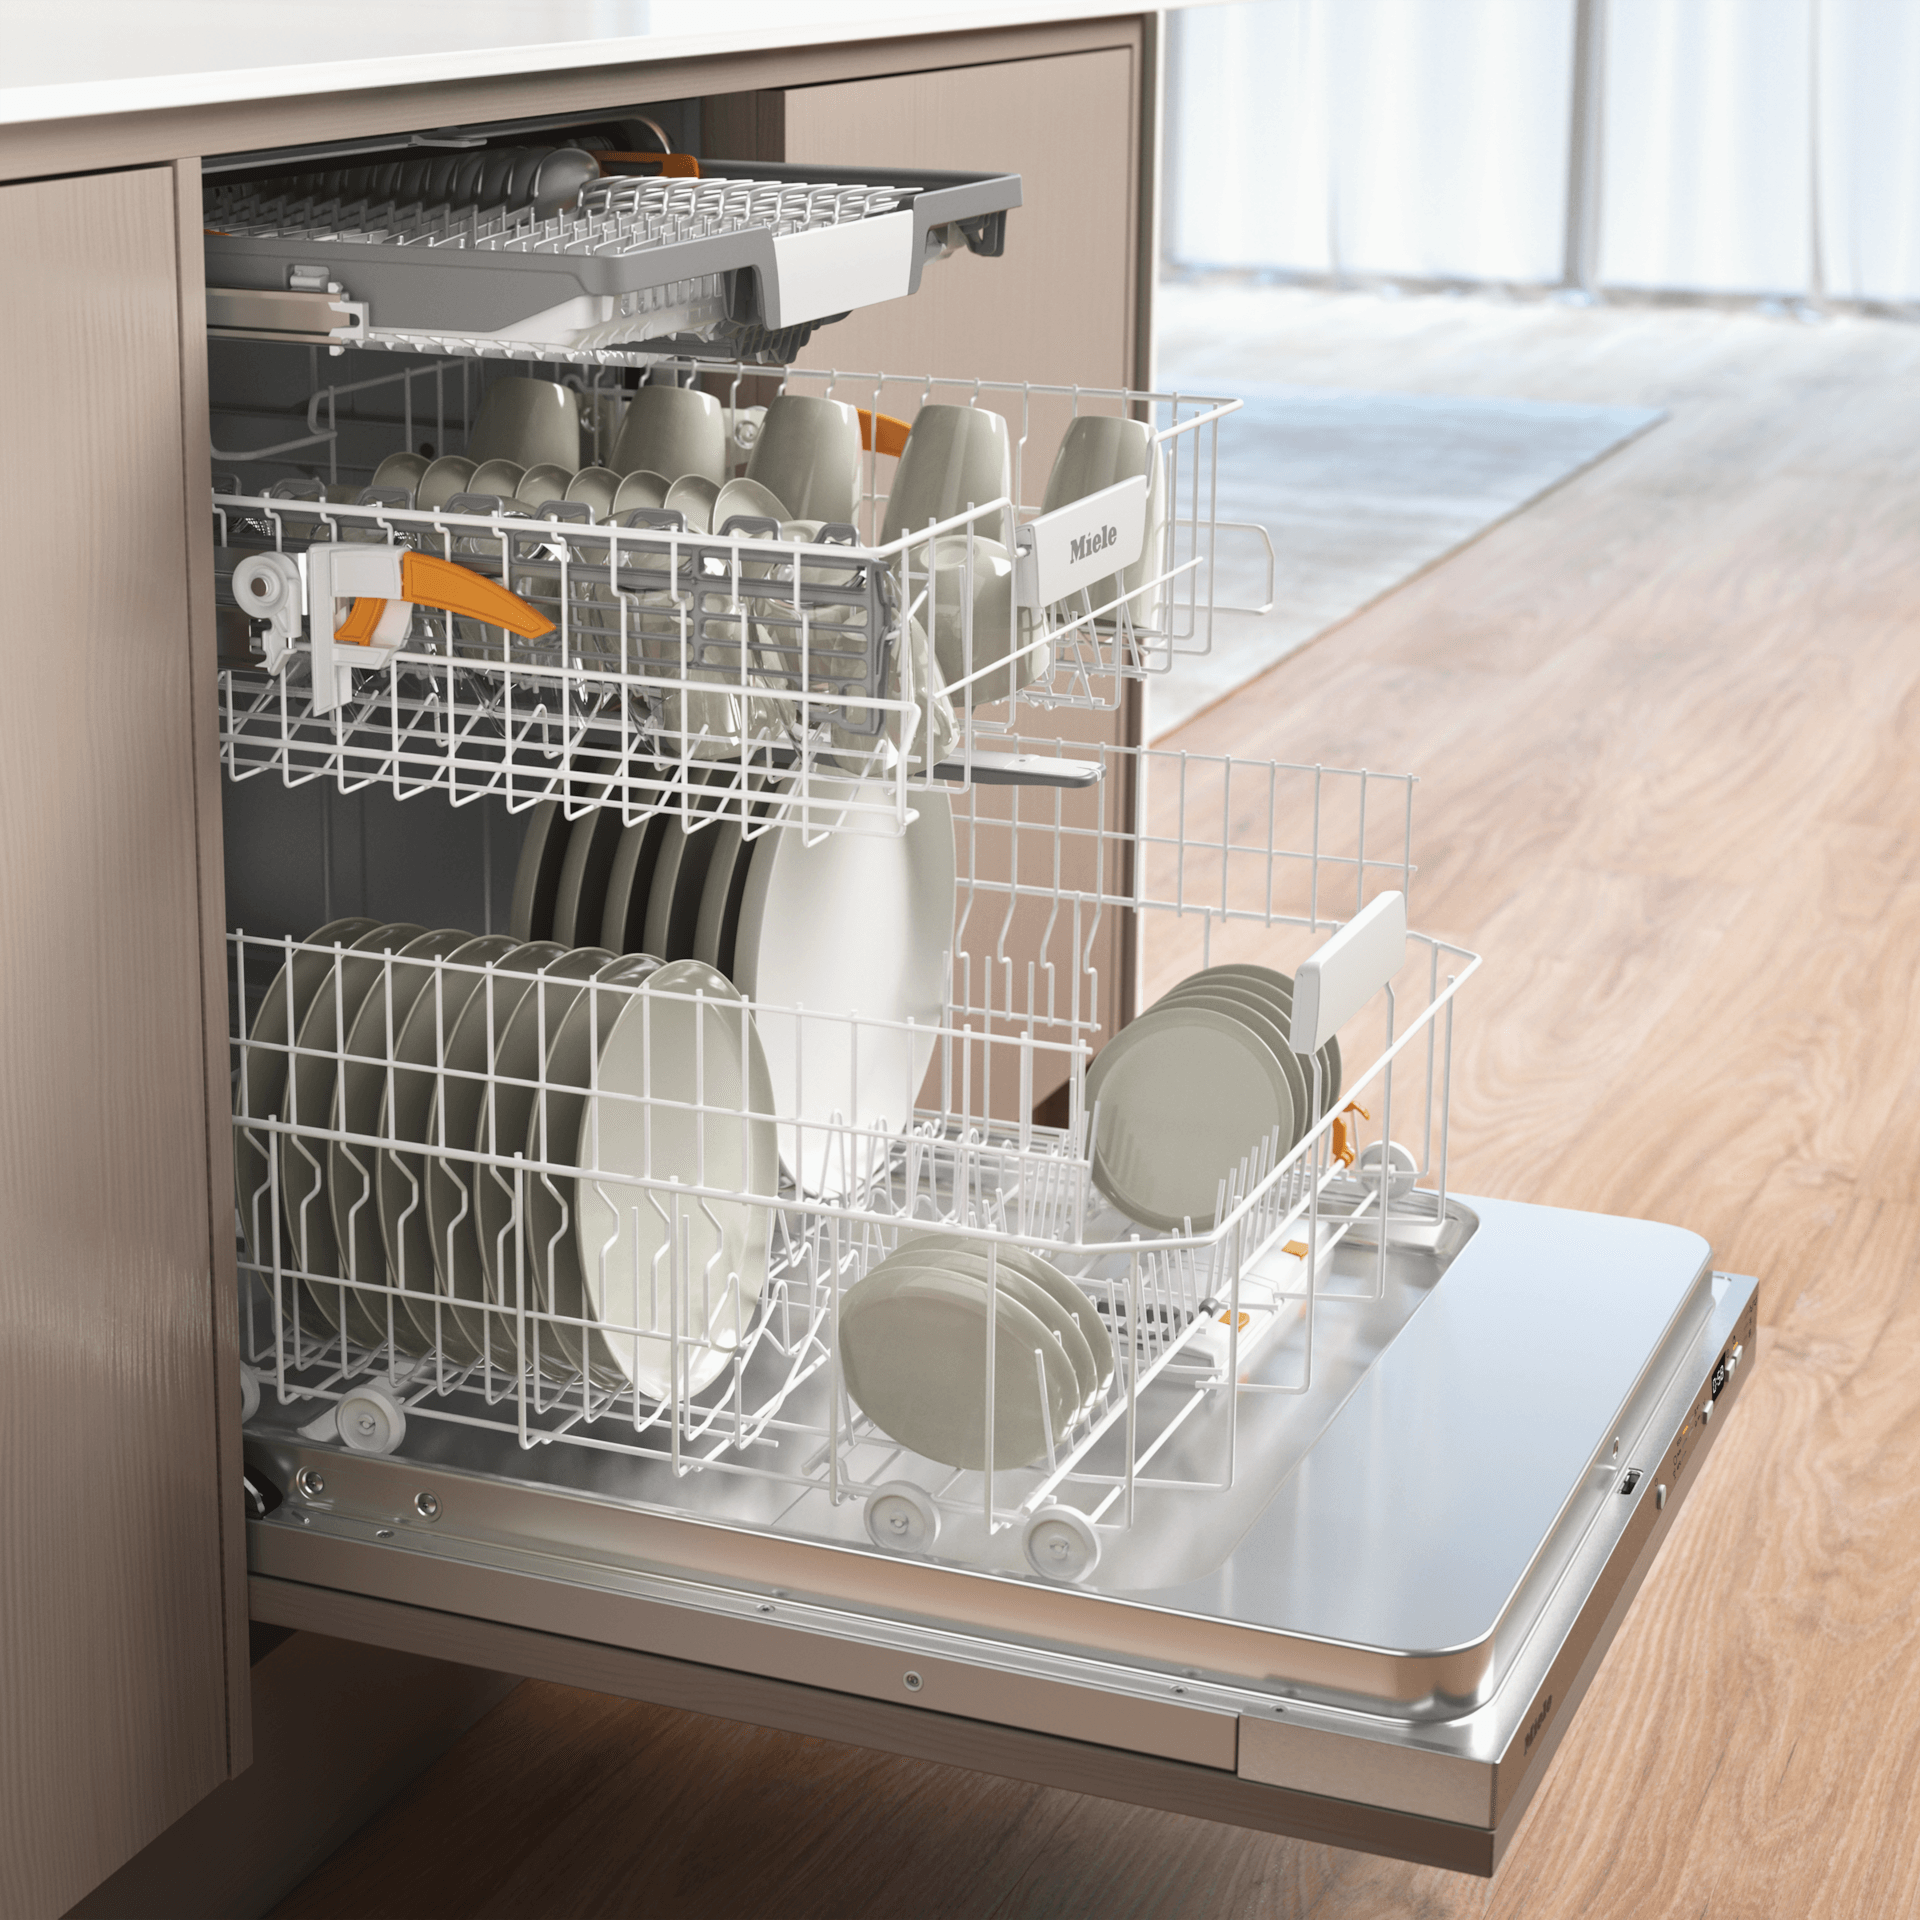 Miele Fully-Integrated Dishwashers G5350 SCVi - Posh Import